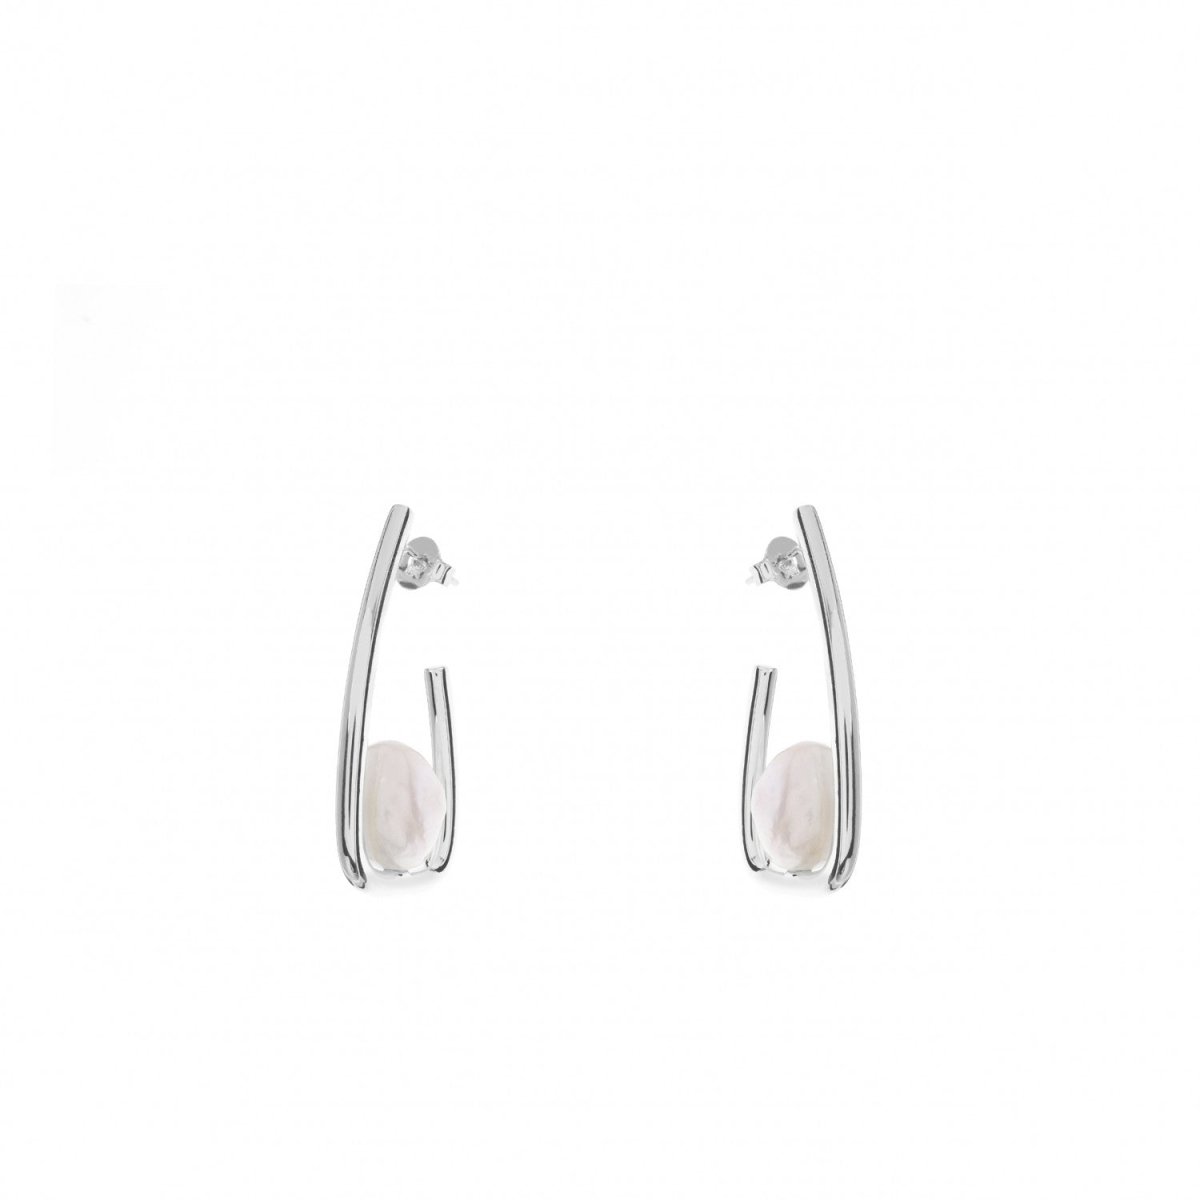 Pendientes perlas diseño geométrico detalle de perla y plata lisa - LINEARGENT